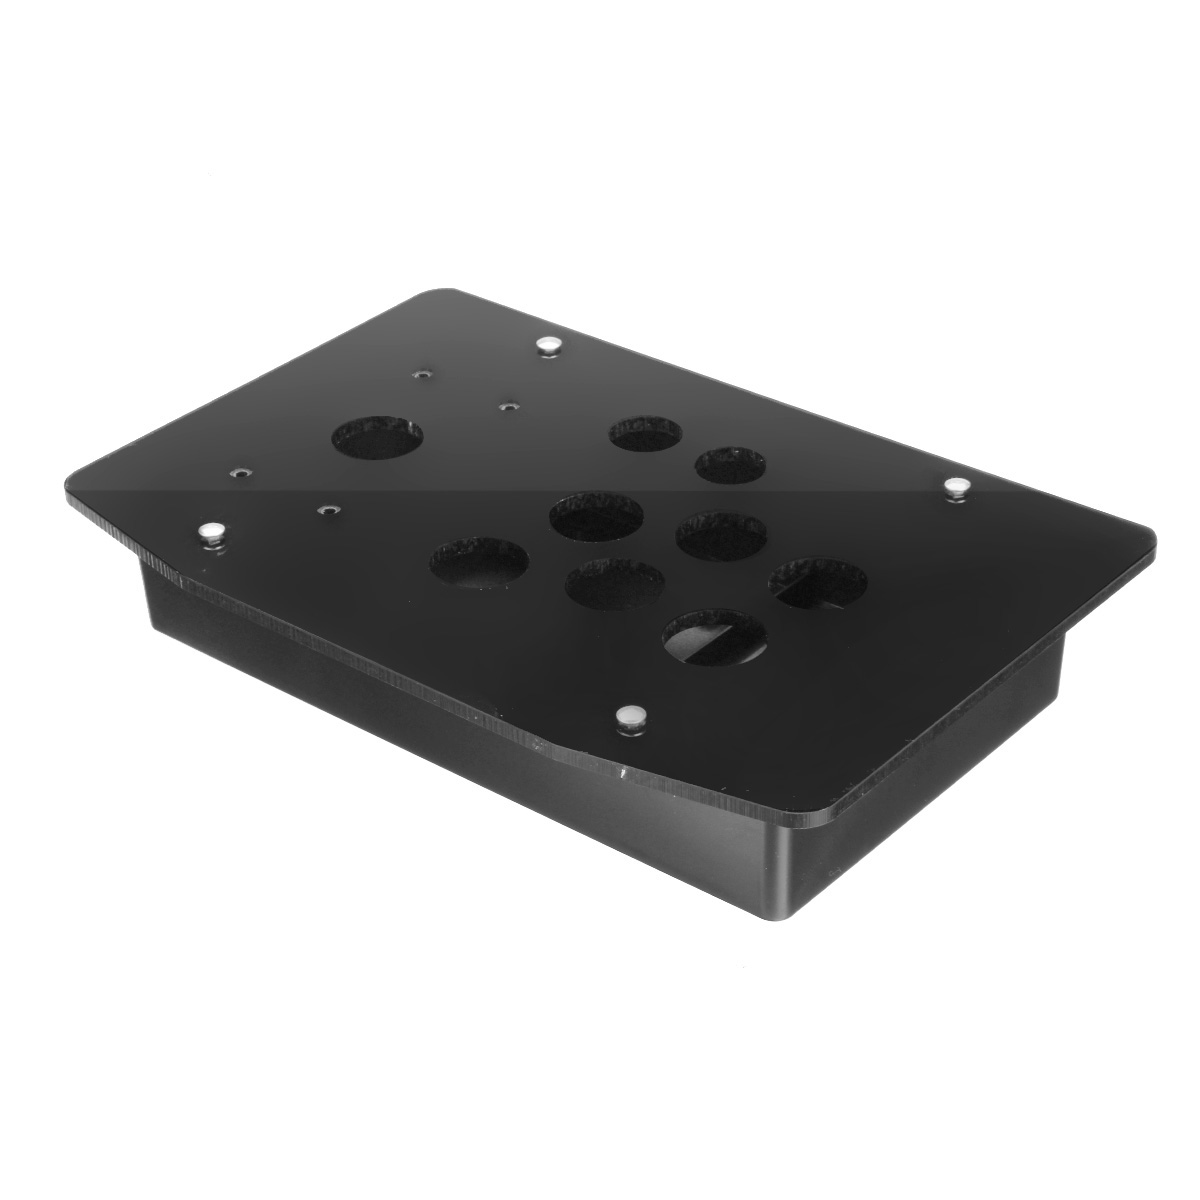 DIY Clear Black Acrylic Panel Case Sturdy Construction for Arcade Joystick Game Controller 14